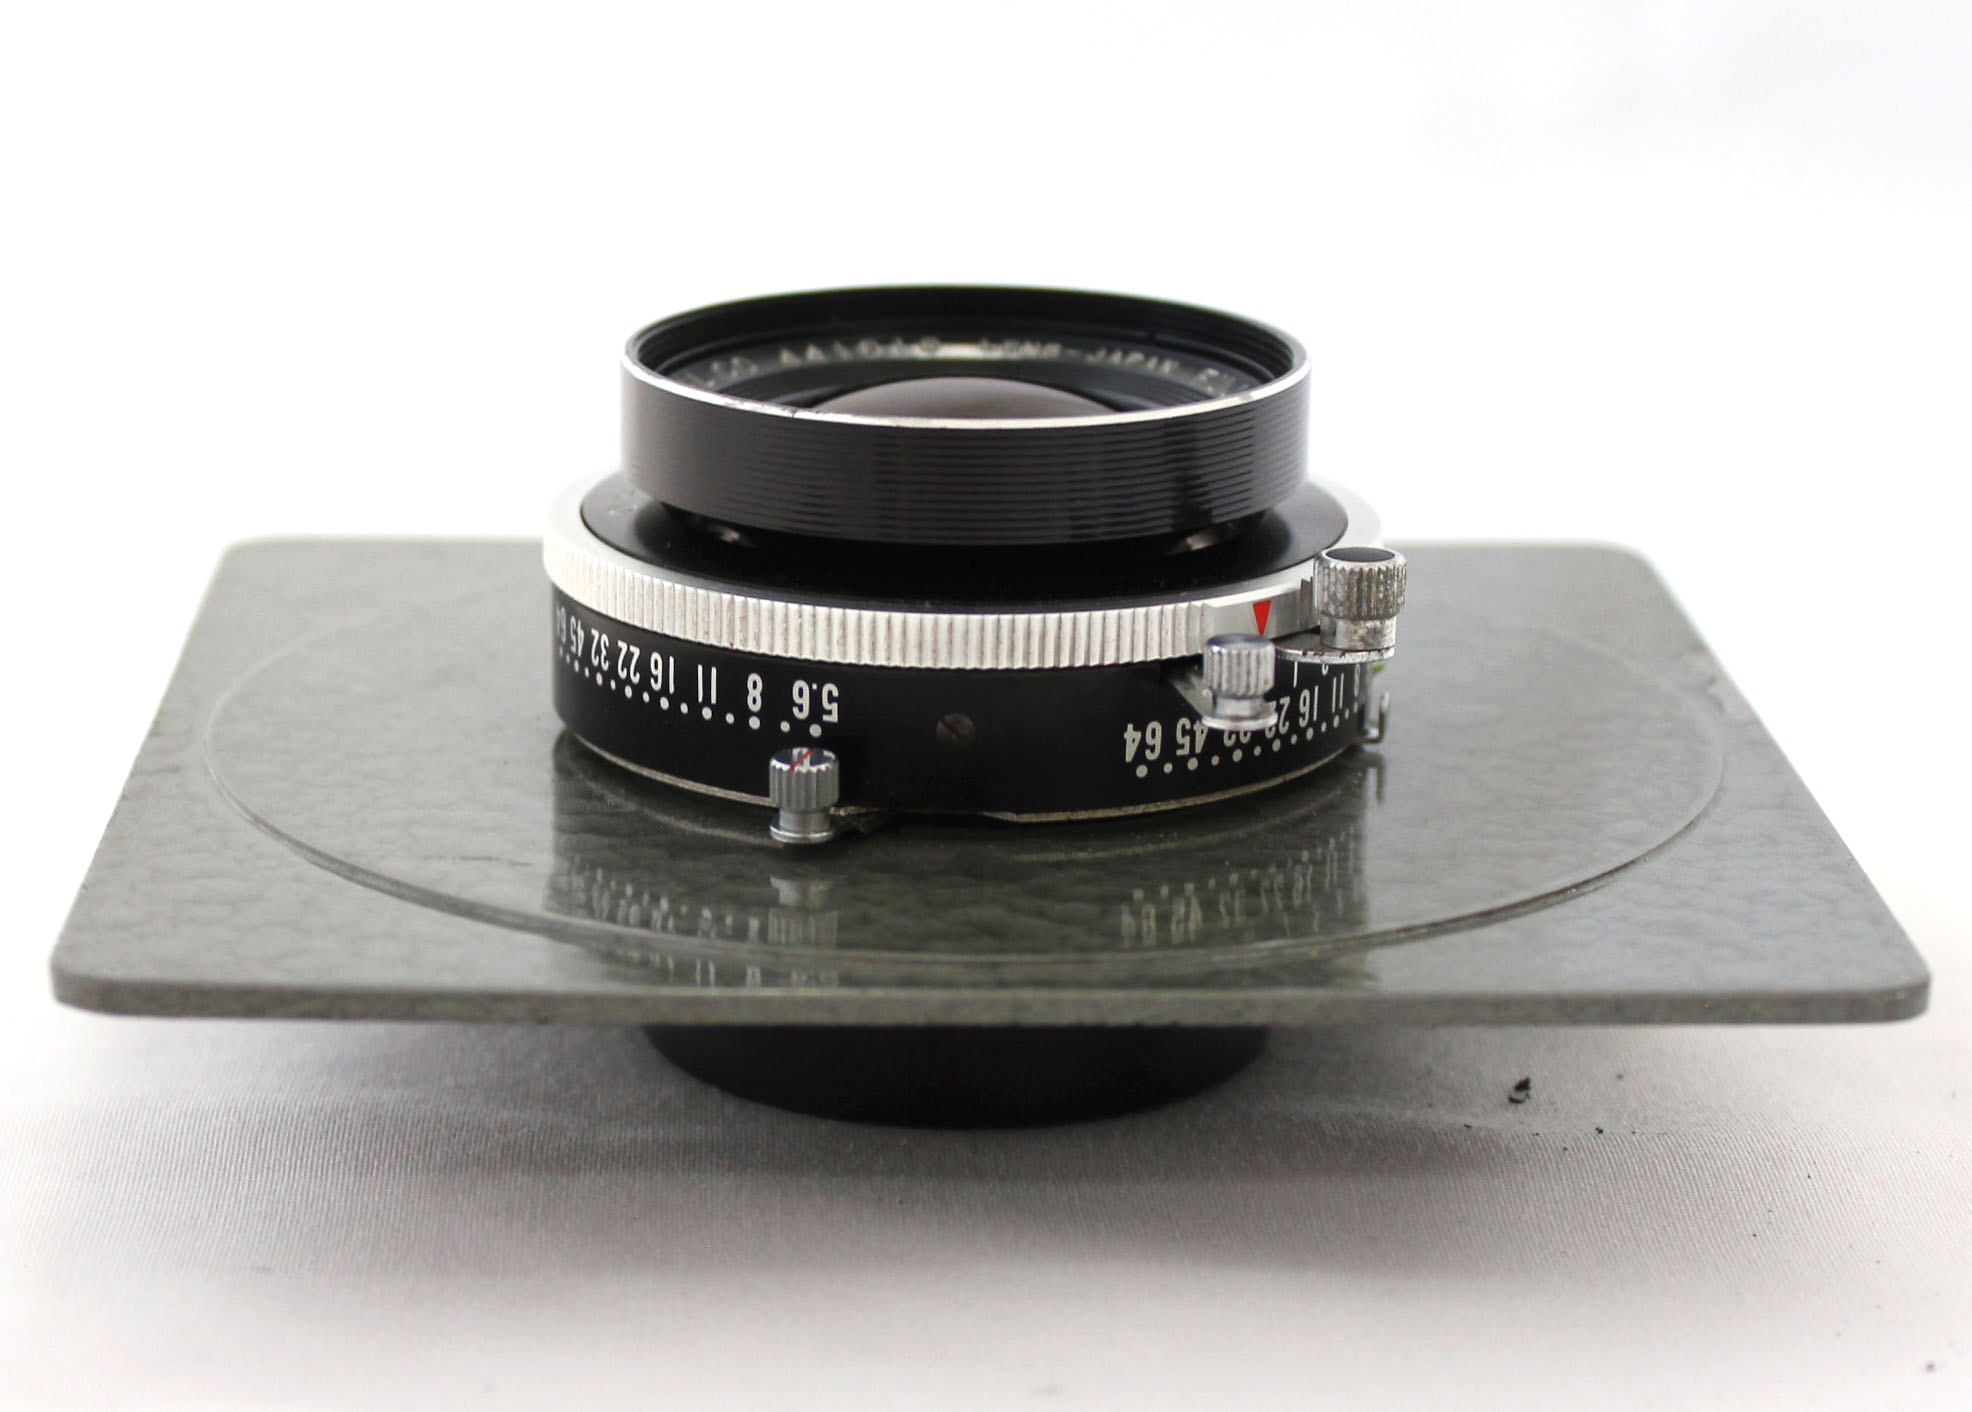 Fuji Fujinon W S 150mm F/5.6 Large Format Lens Seiko Shutter from Japan Photo 5